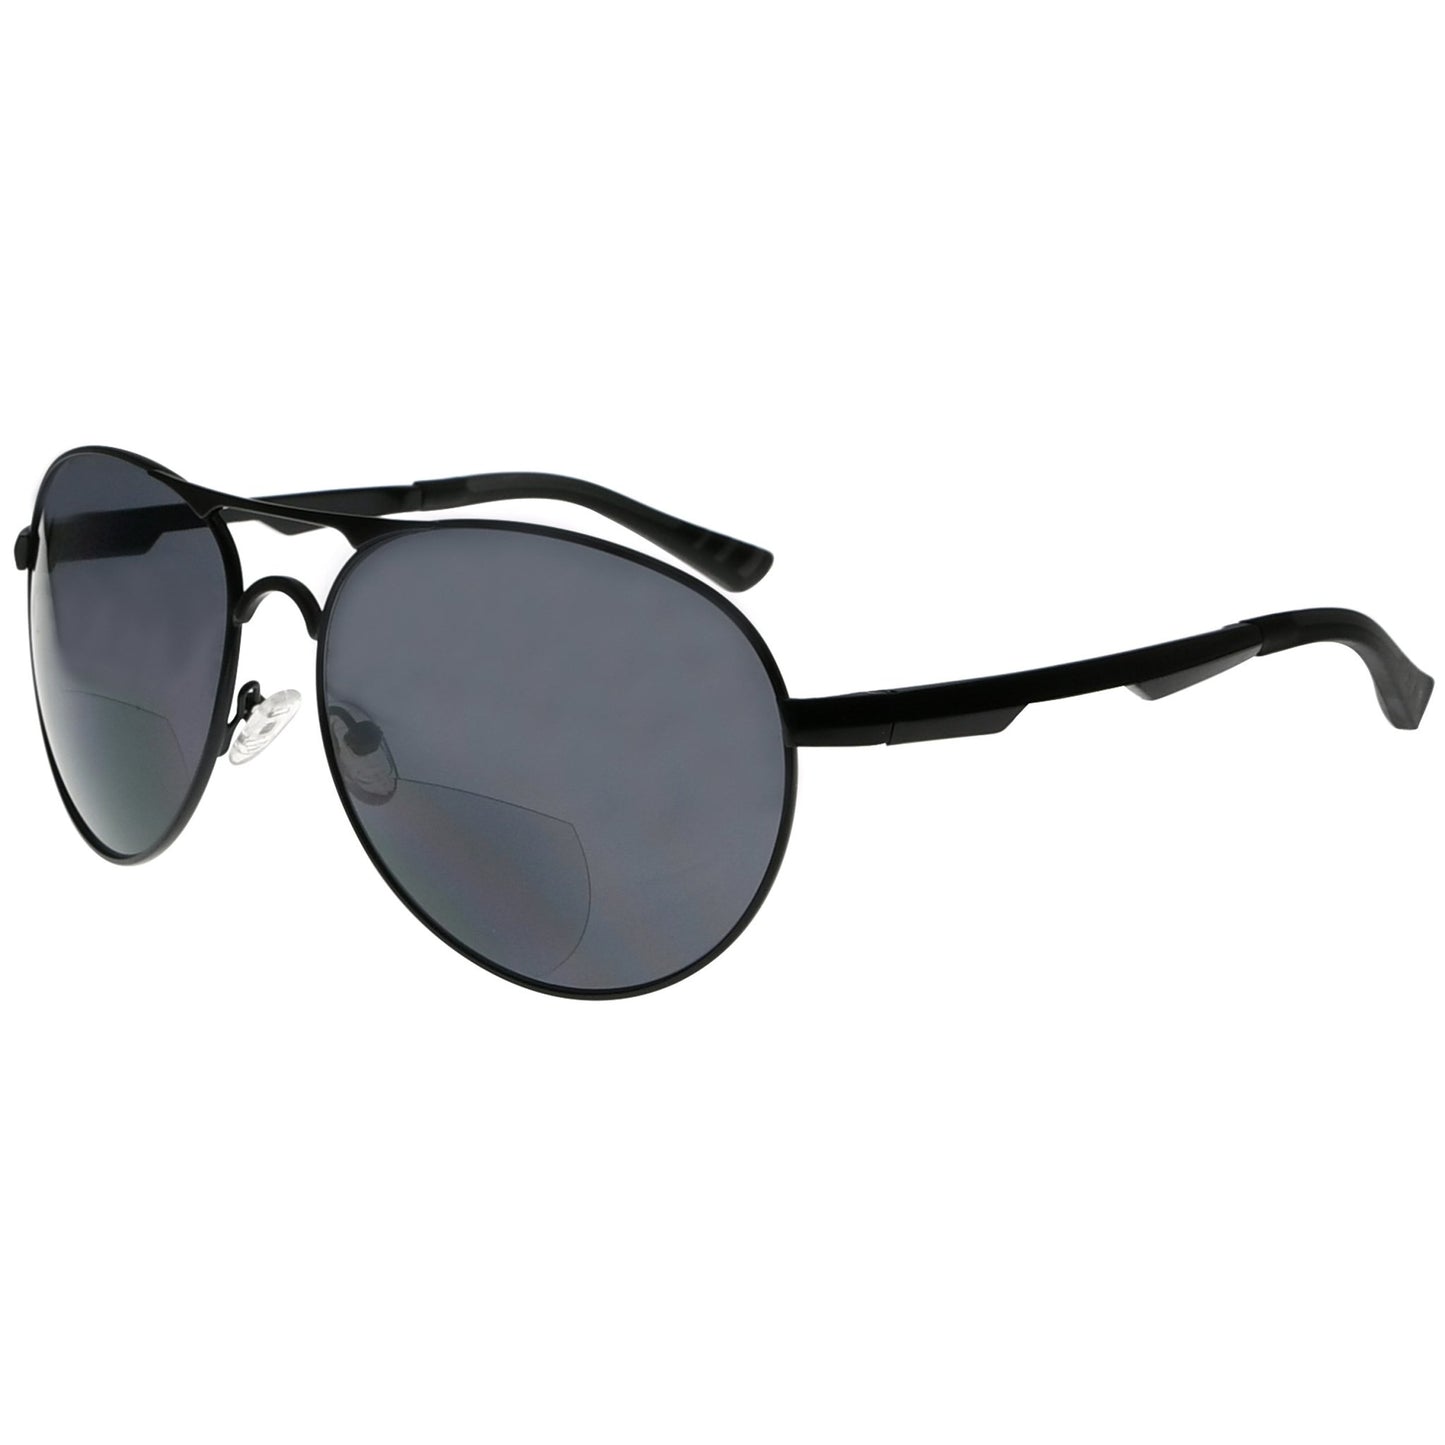 Pilot Style Bifocal Sunglasses Black SG803